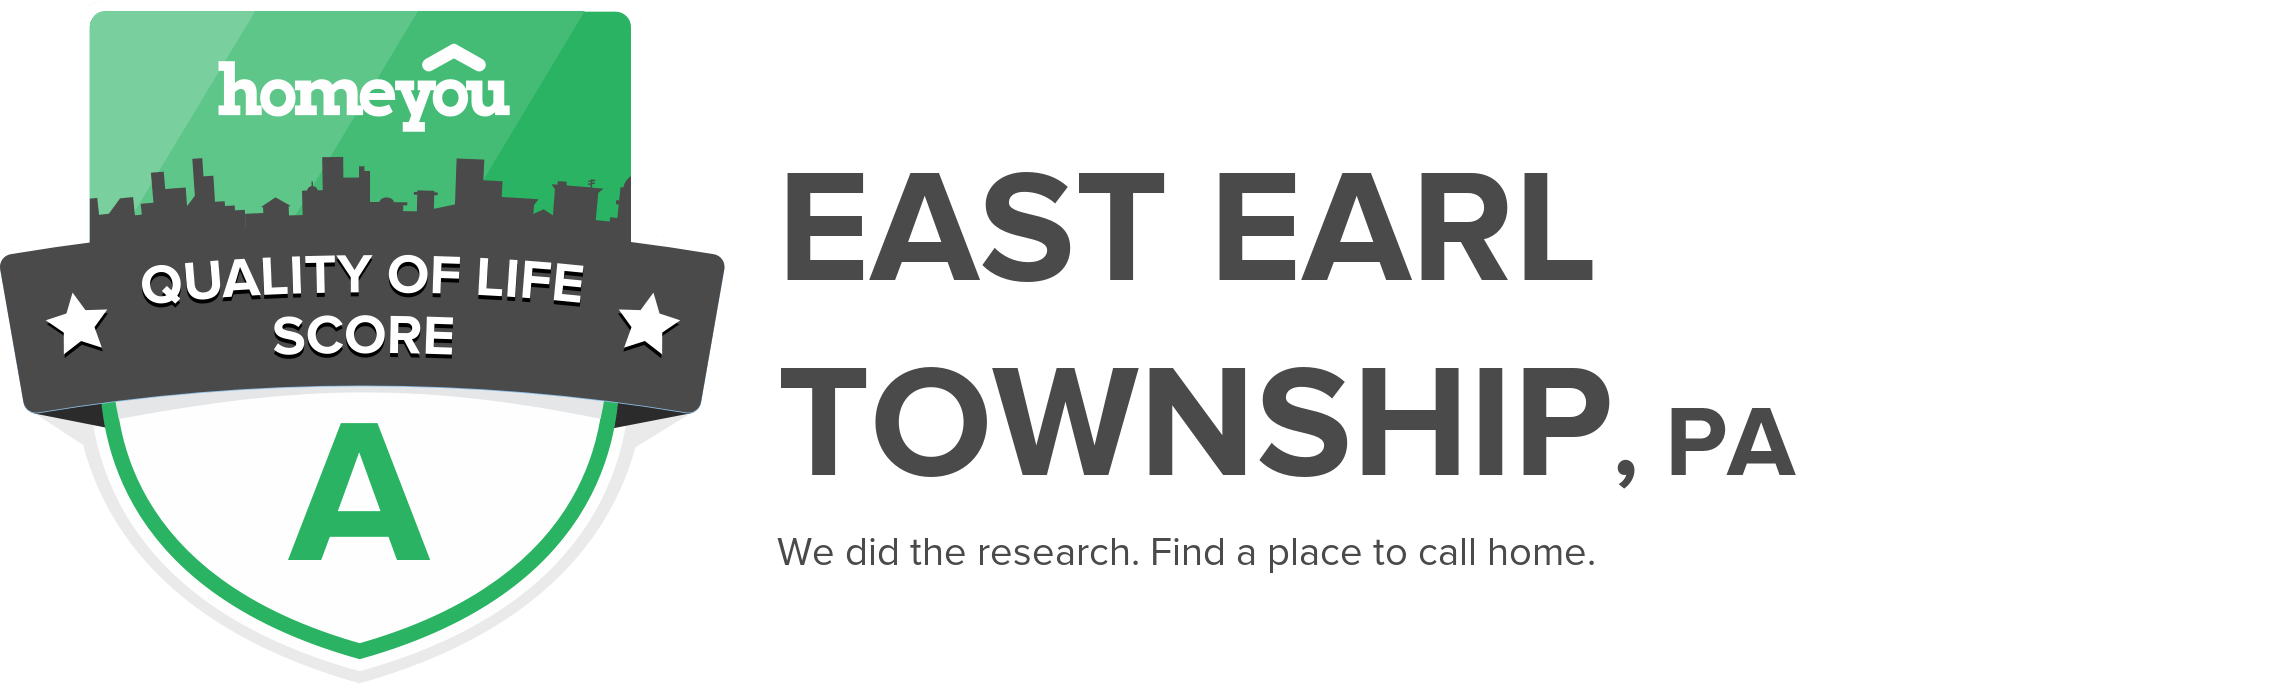 East Earl township, PA